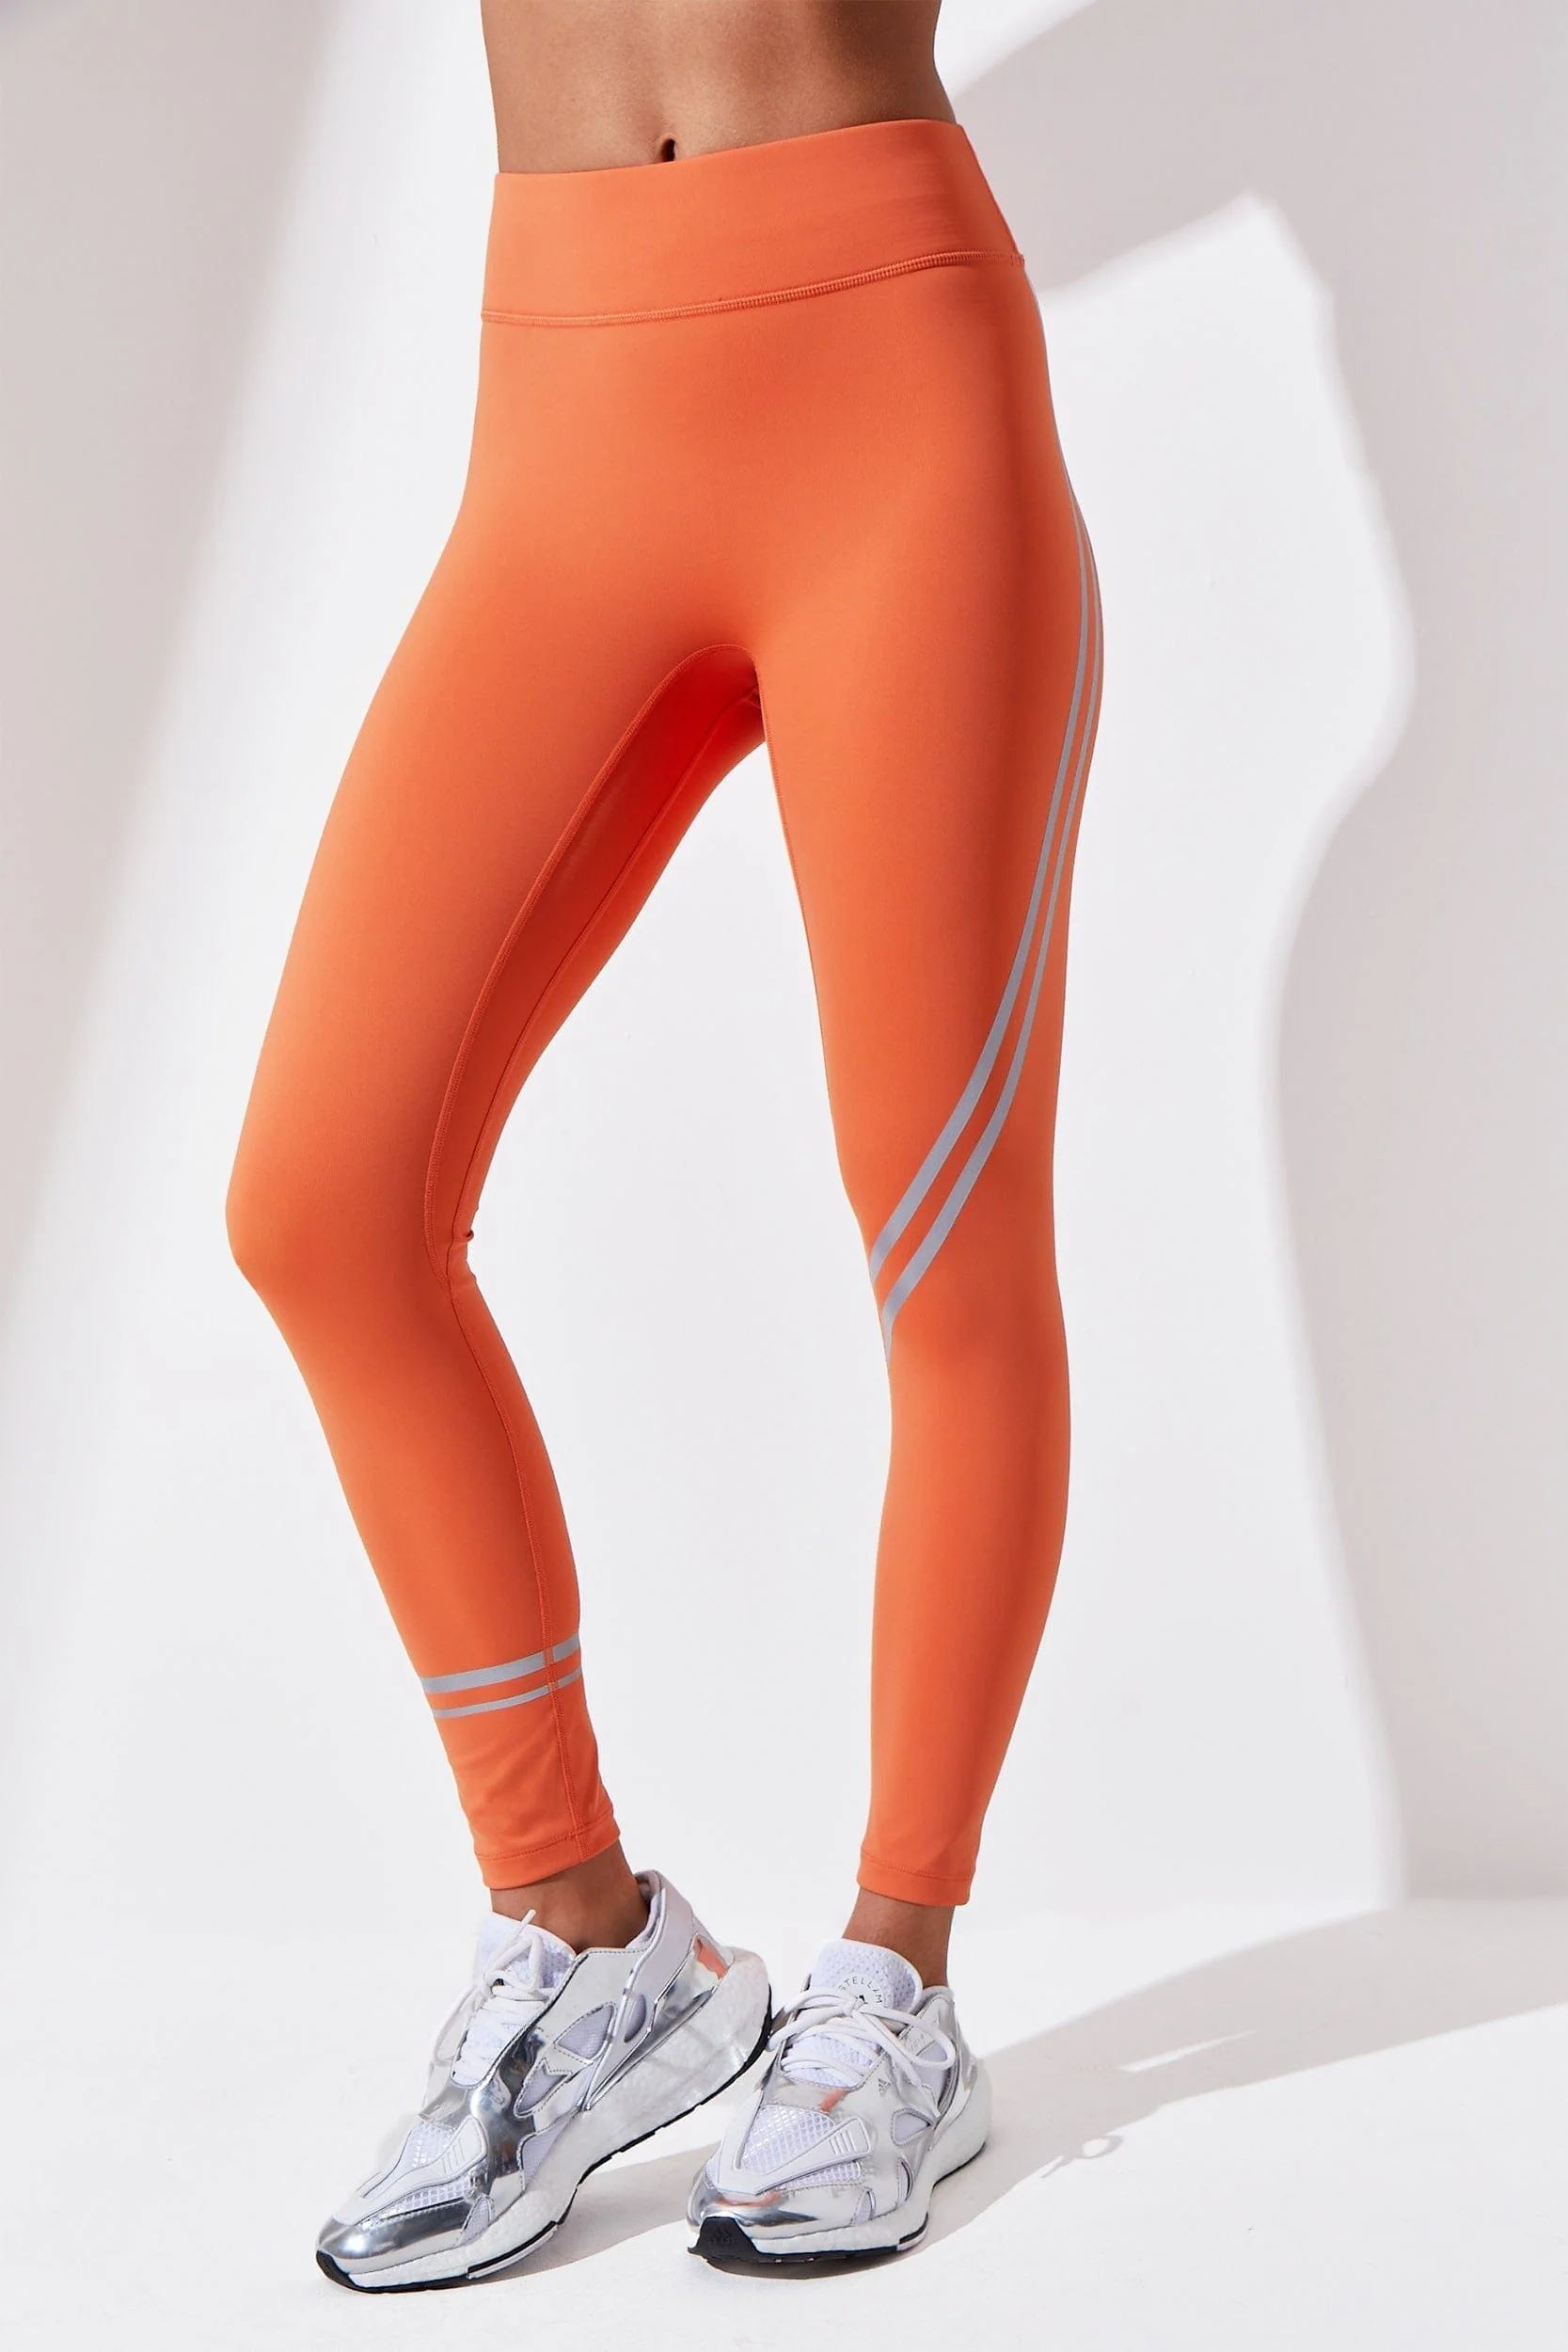 Hype Legging - Orange REFLECTIVE | The Noli Shop